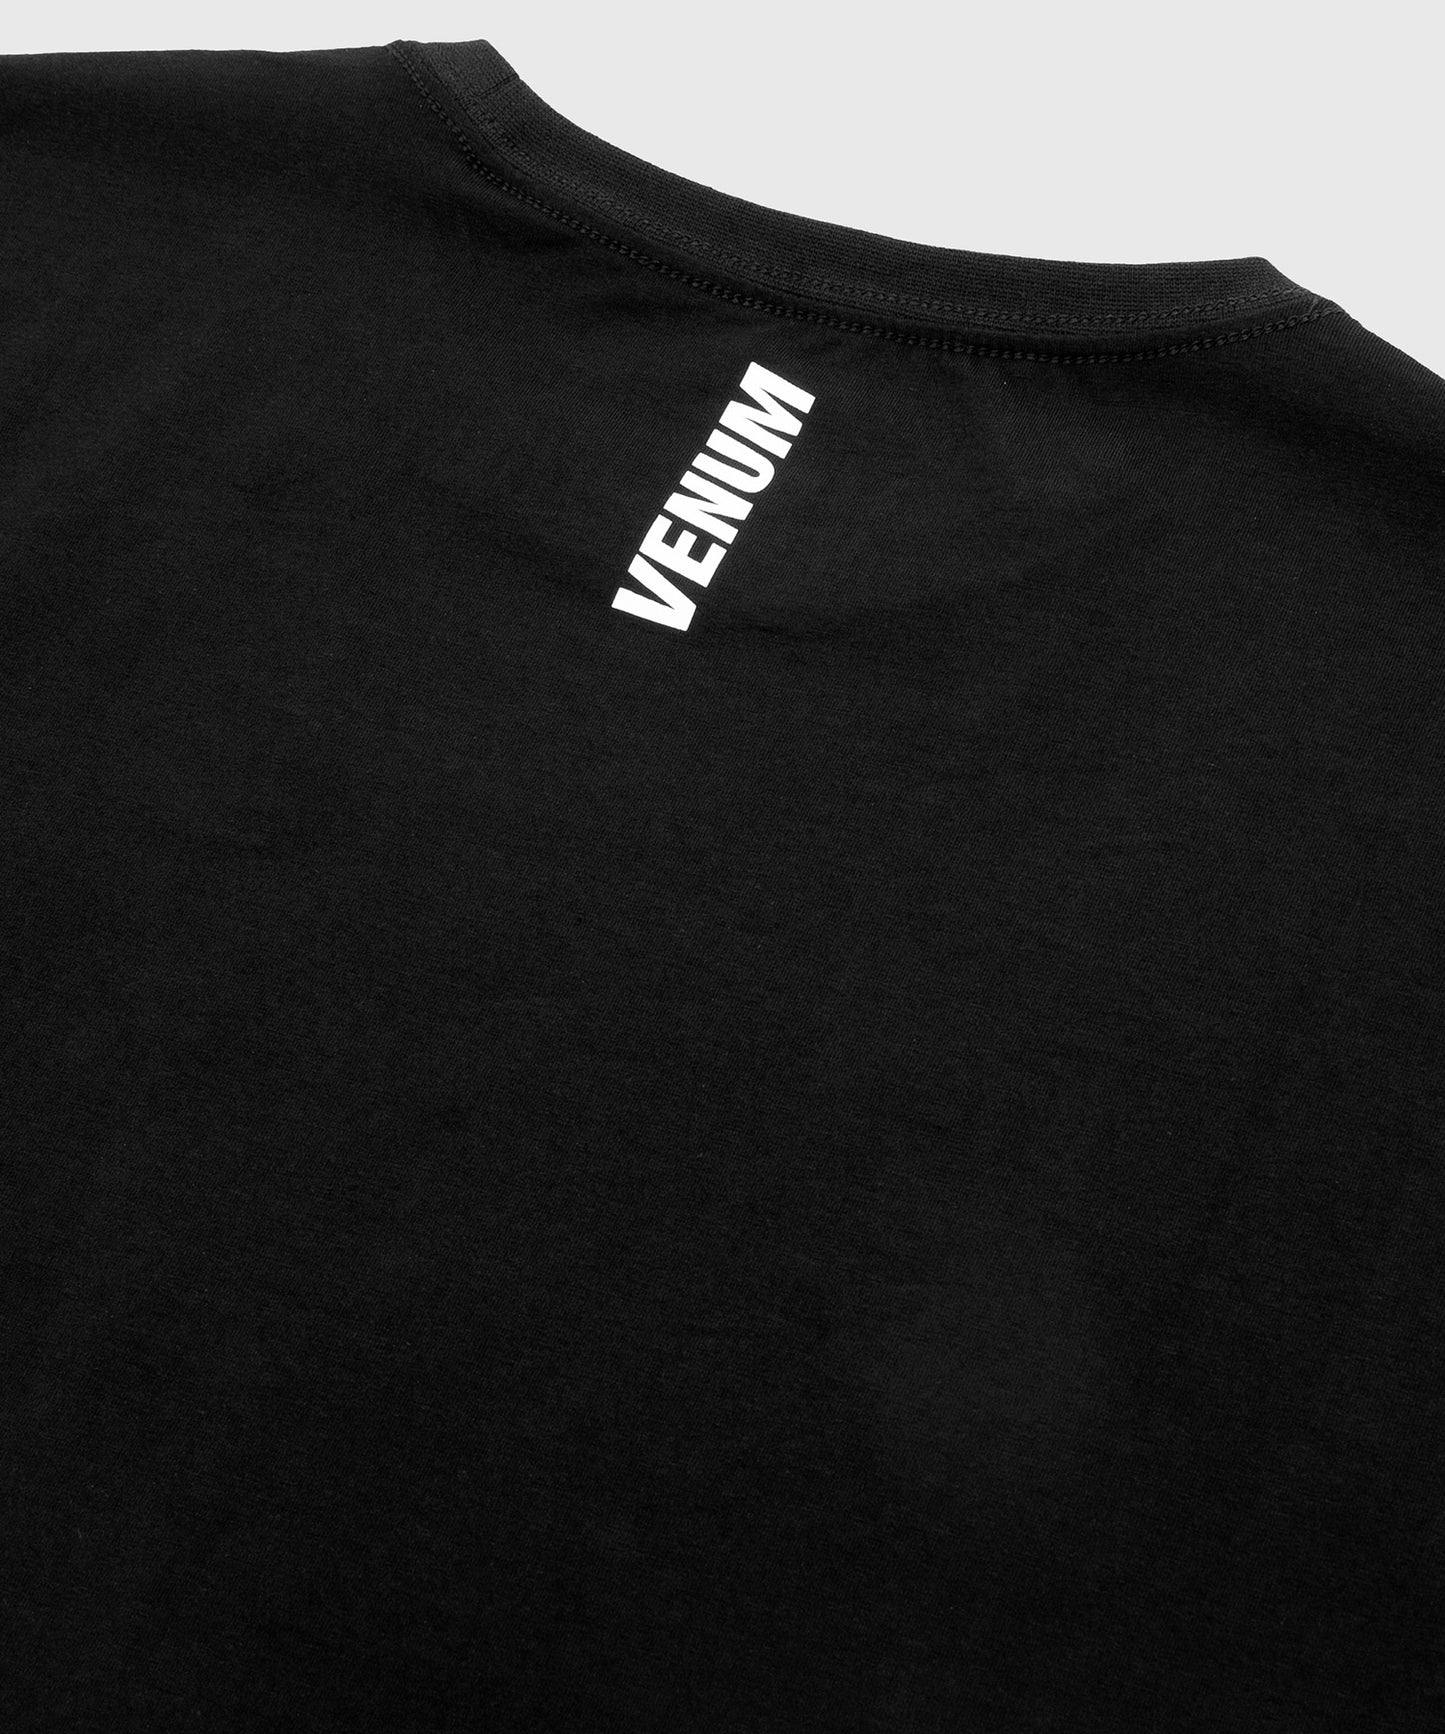 Venum Jiu Jitstu VT T-shirt - Black/White